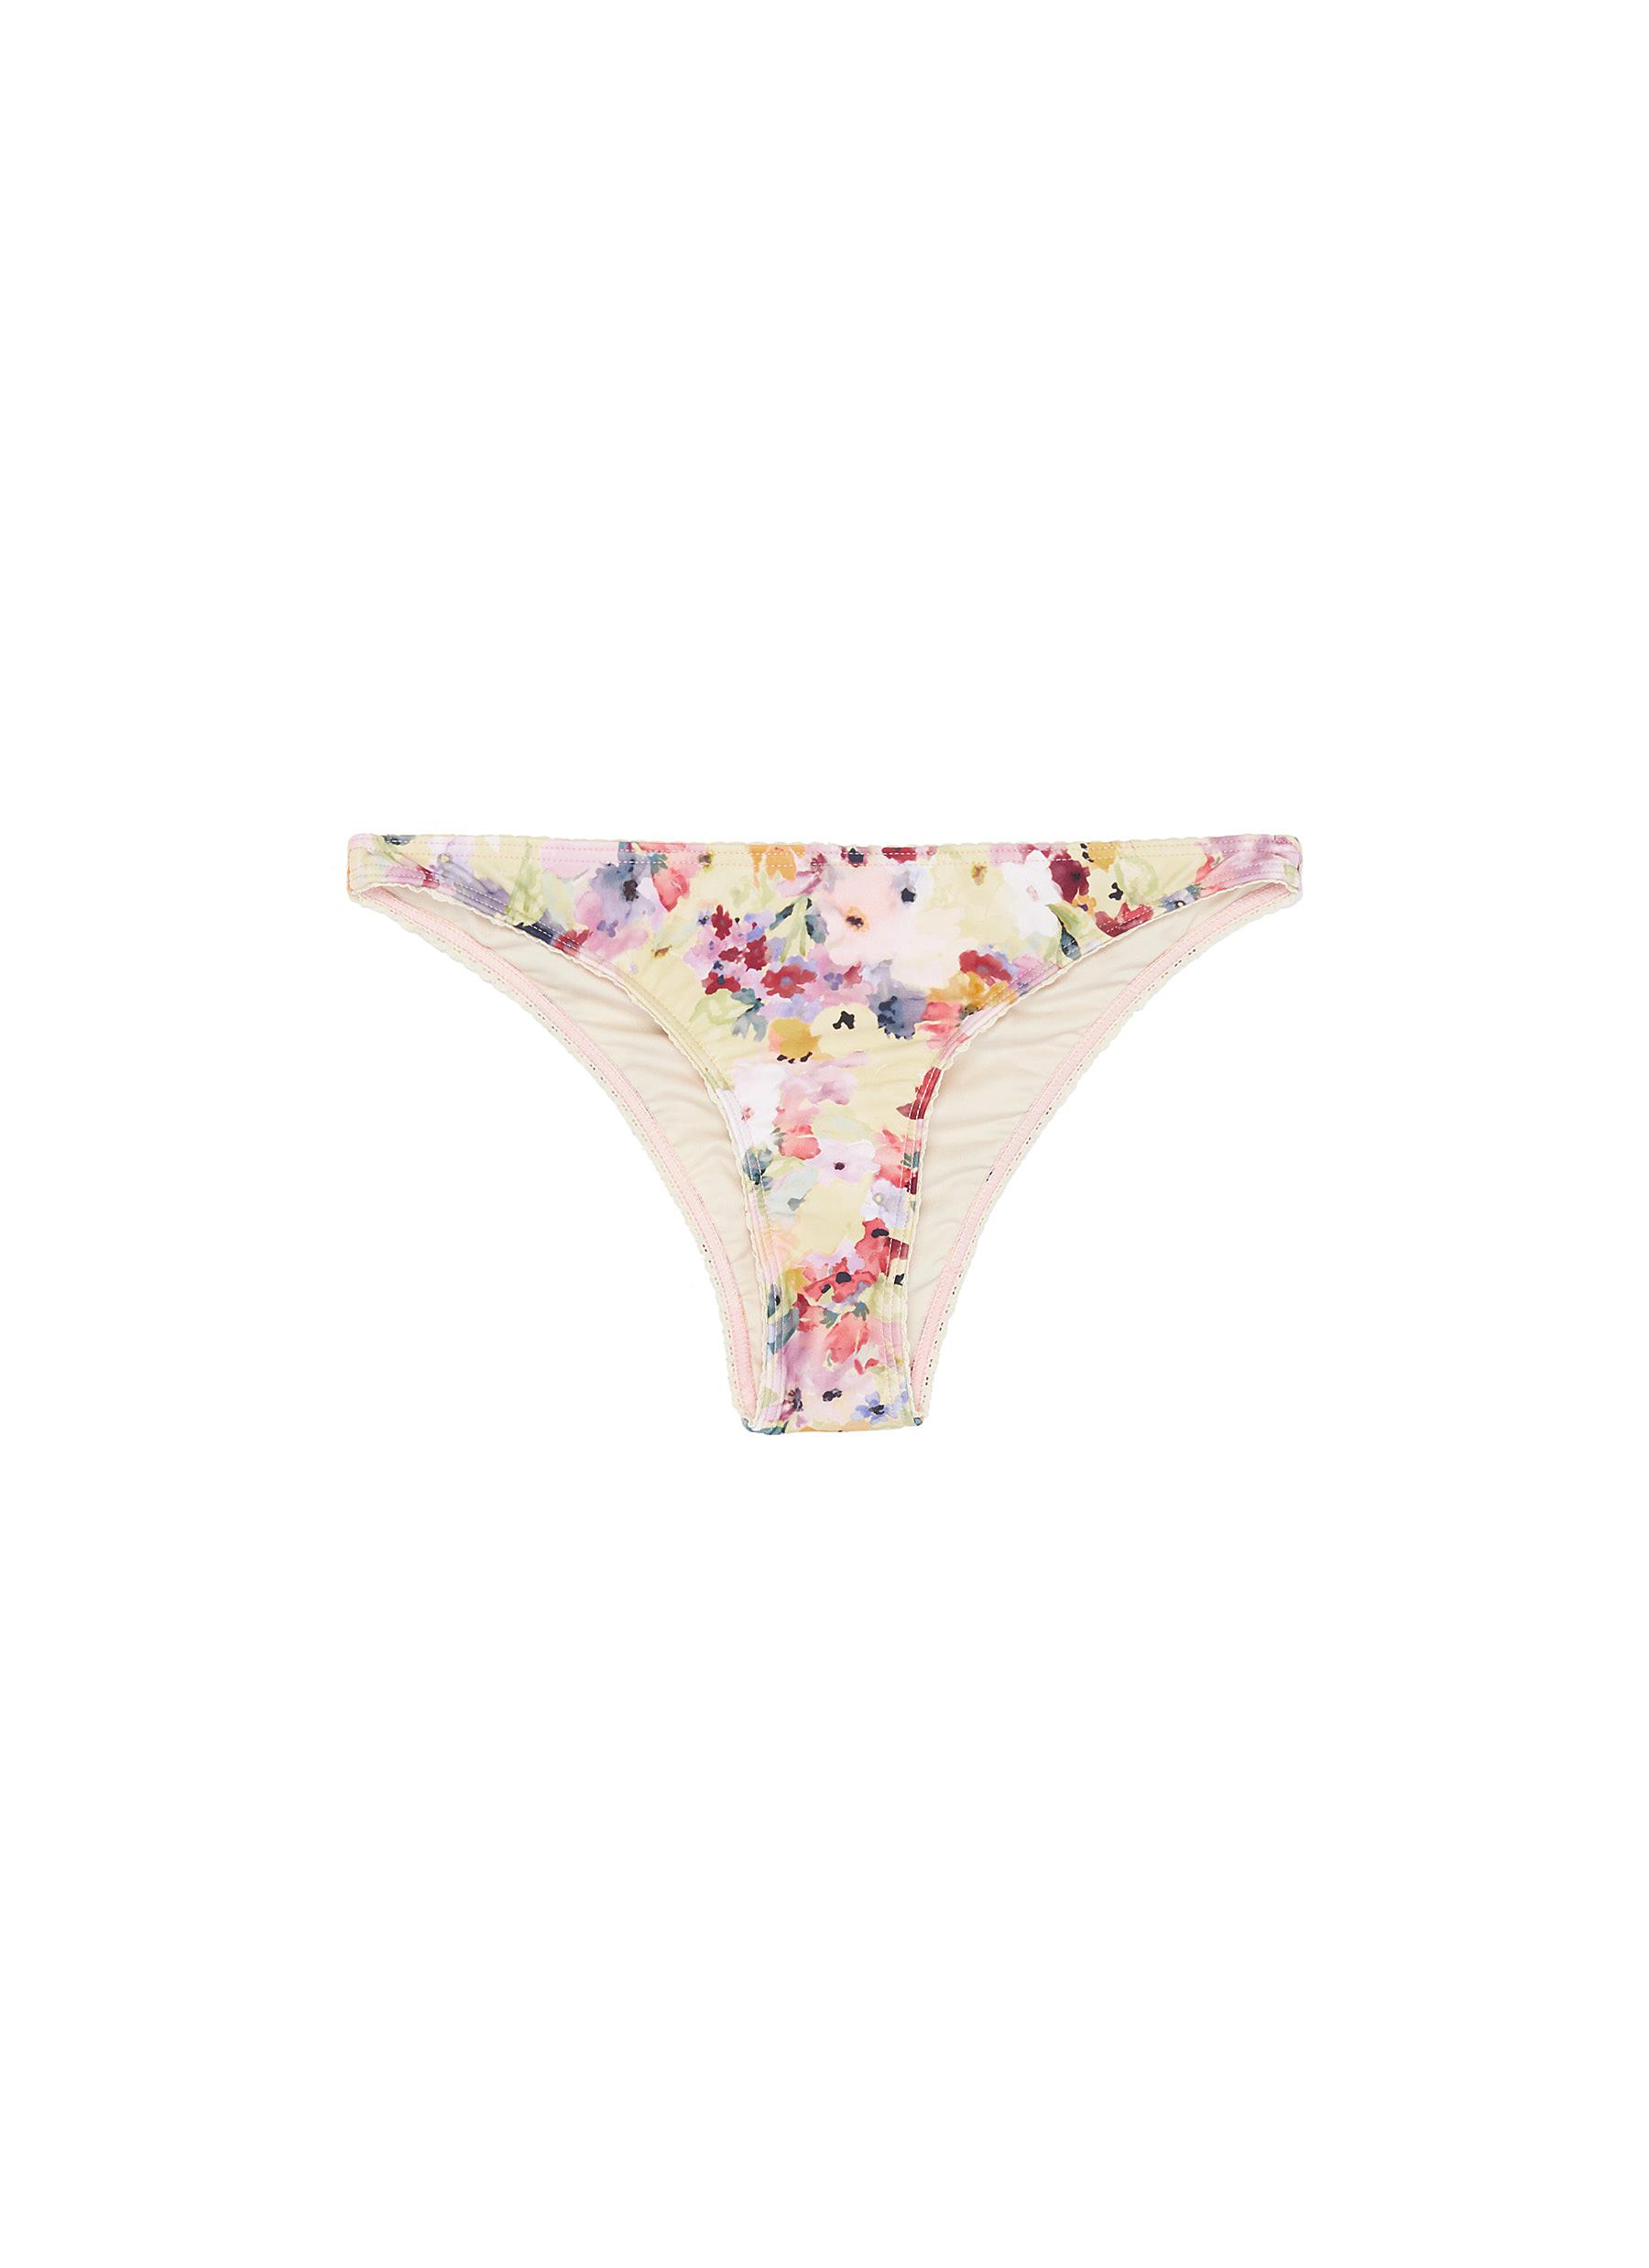 Tutti Fruitti floral print Econyl™ bikini bottoms by Peony